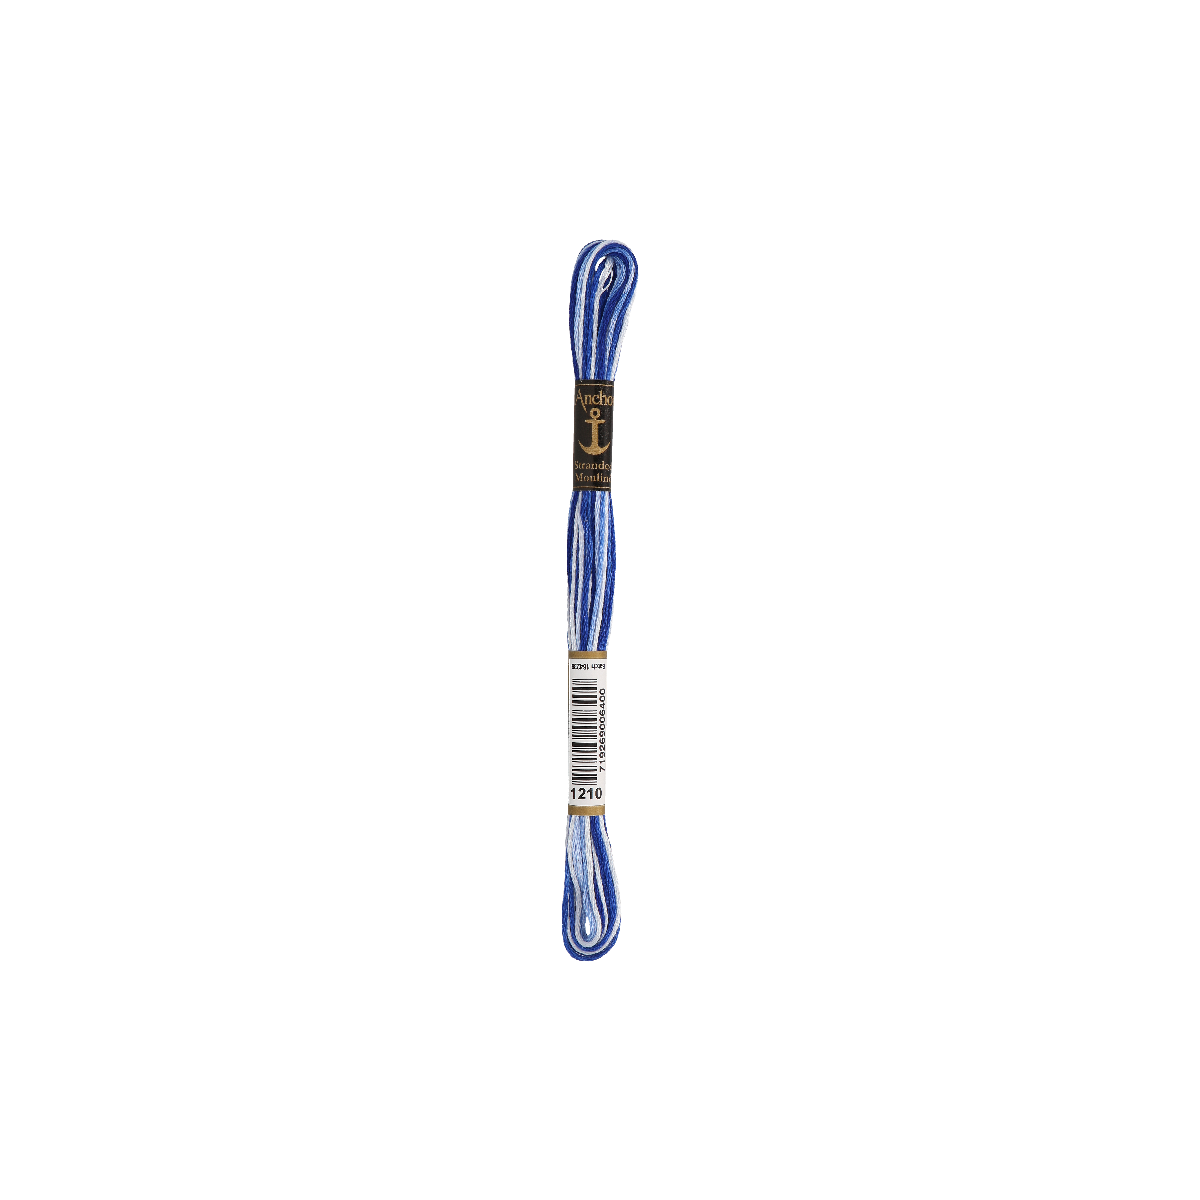 Anchor Torsade 8m, bleu ombre, coton, couleur 1210, 6 fils